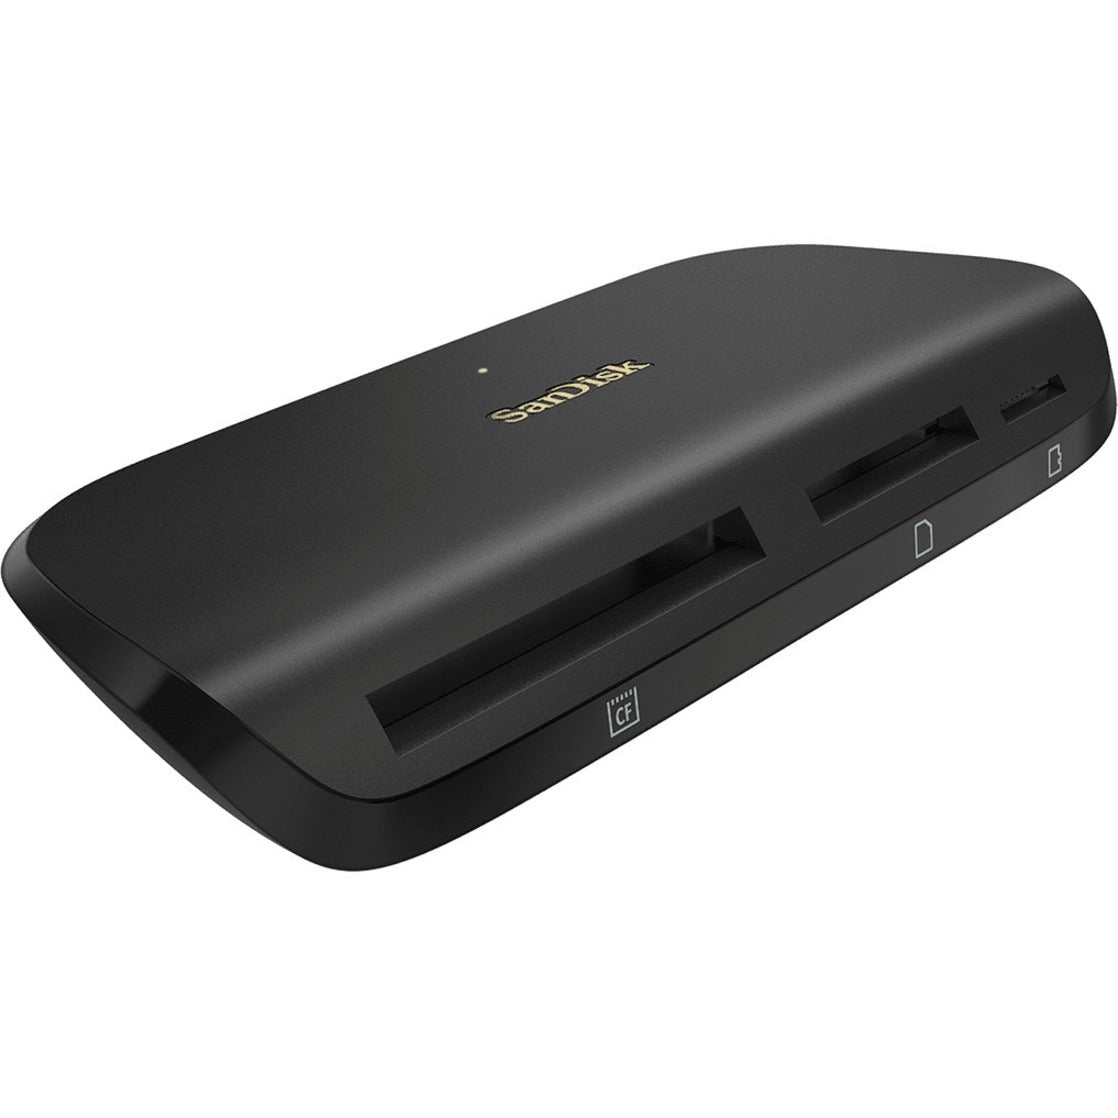 SanDisk SDDR-A631-ANGNN ImageMate PRO Flash Reader, USB 3.0 Type A, 2 Year Warranty, Environmentally Friendly